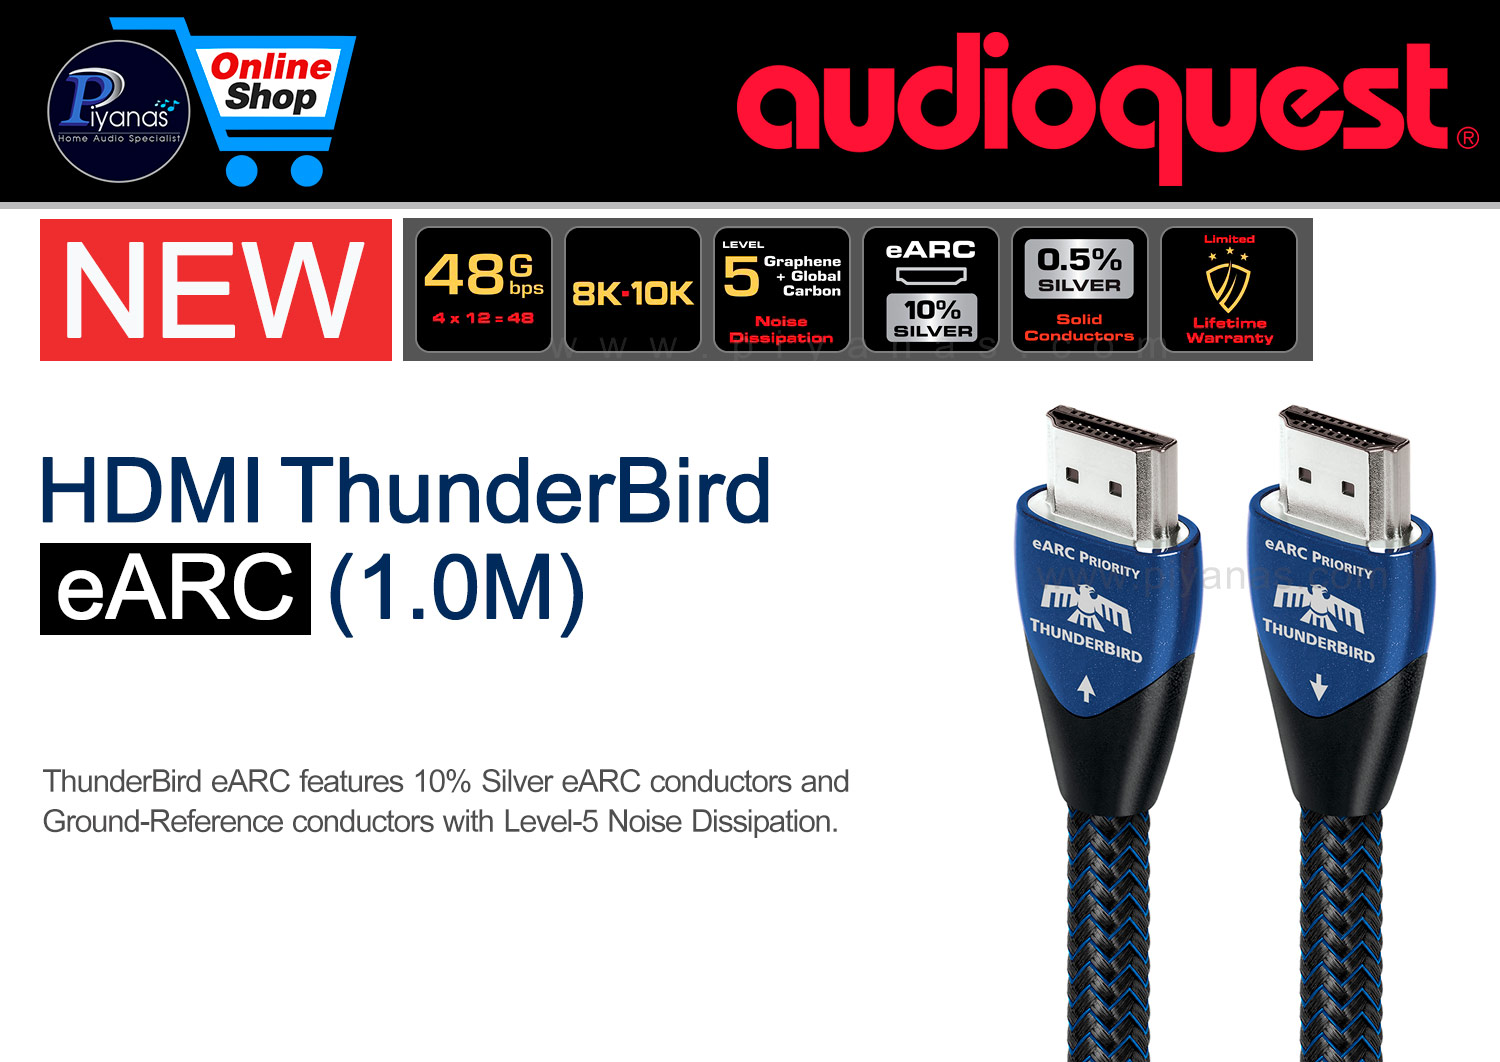 HDMI-ThunderBird eARC (1.0M)